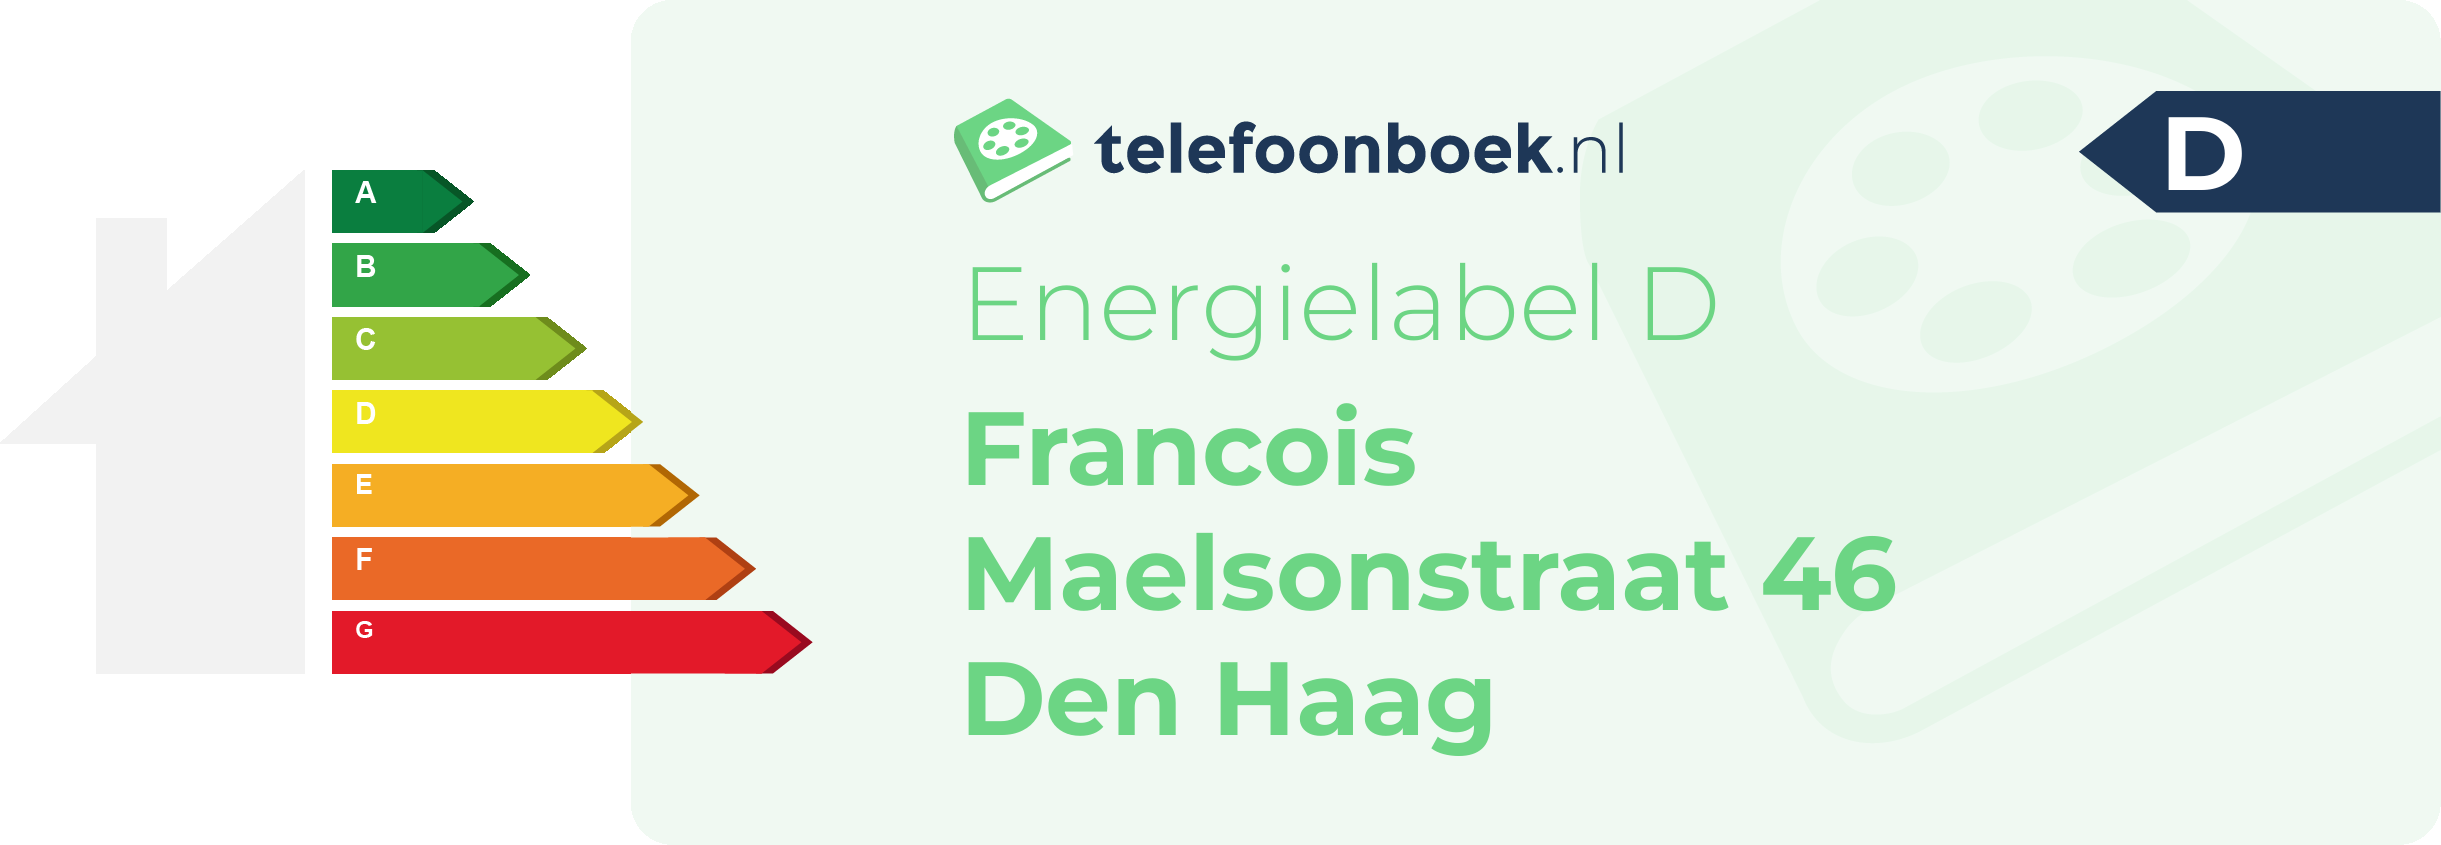 Energielabel Francois Maelsonstraat 46 Den Haag